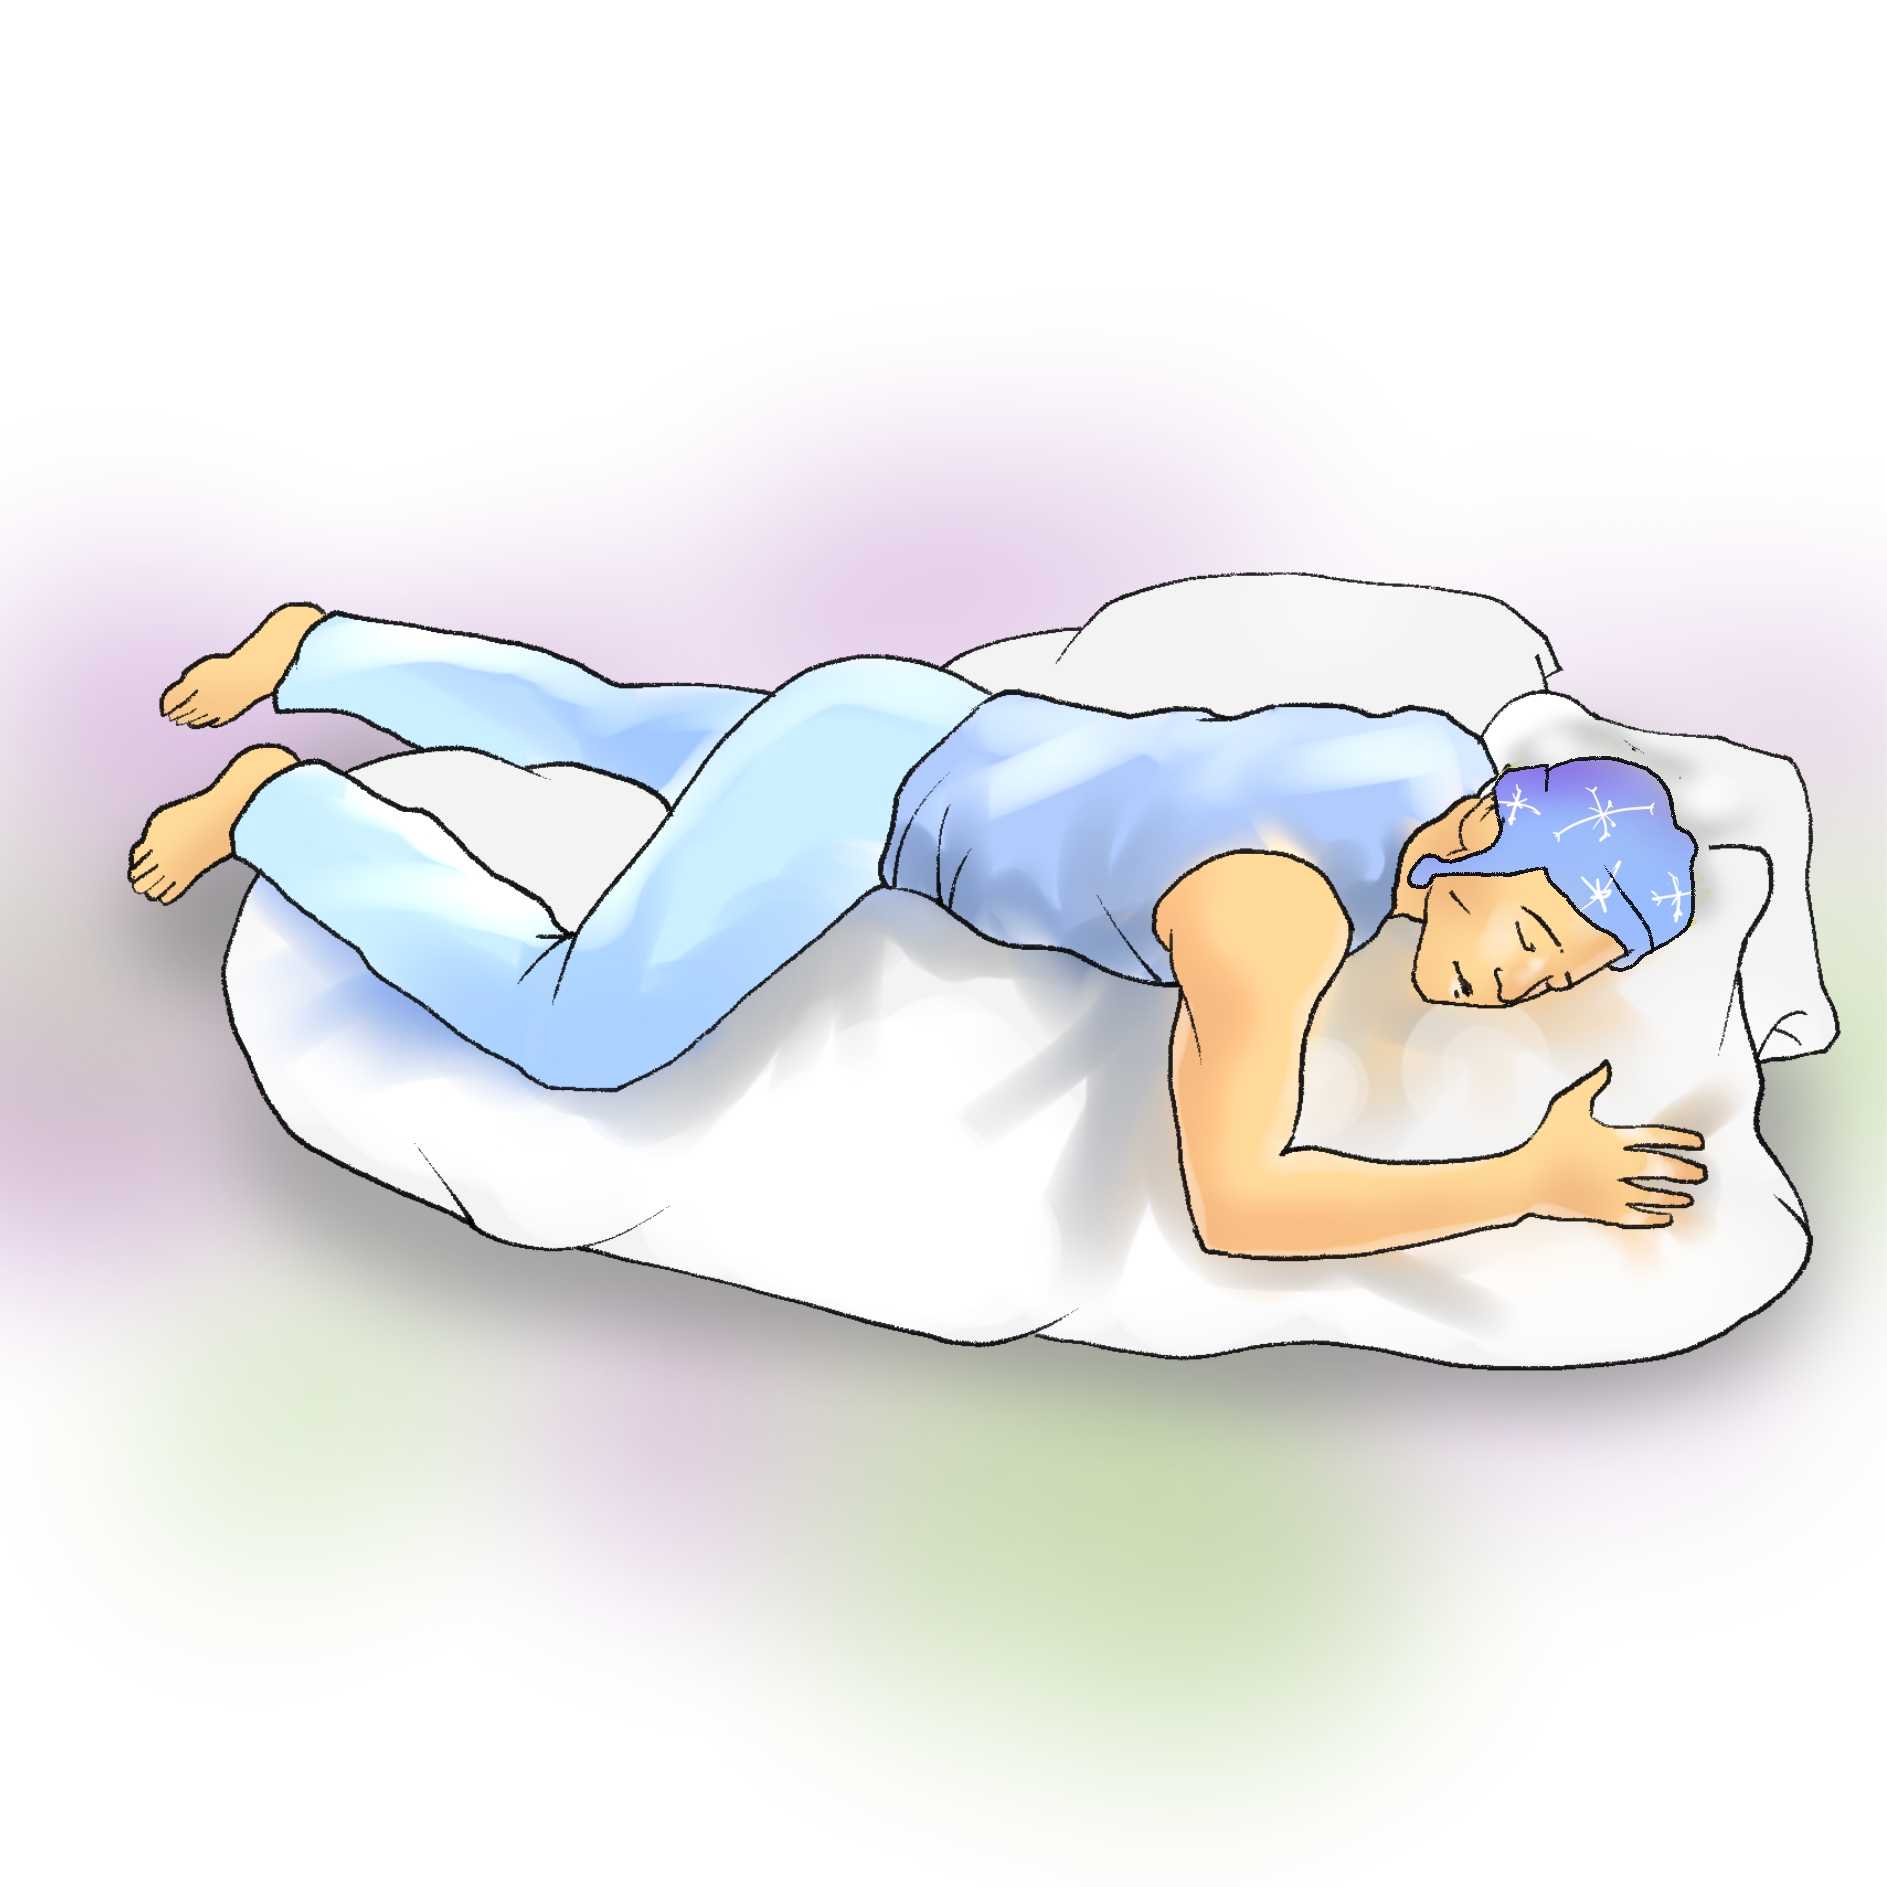 body pillow sleep positions